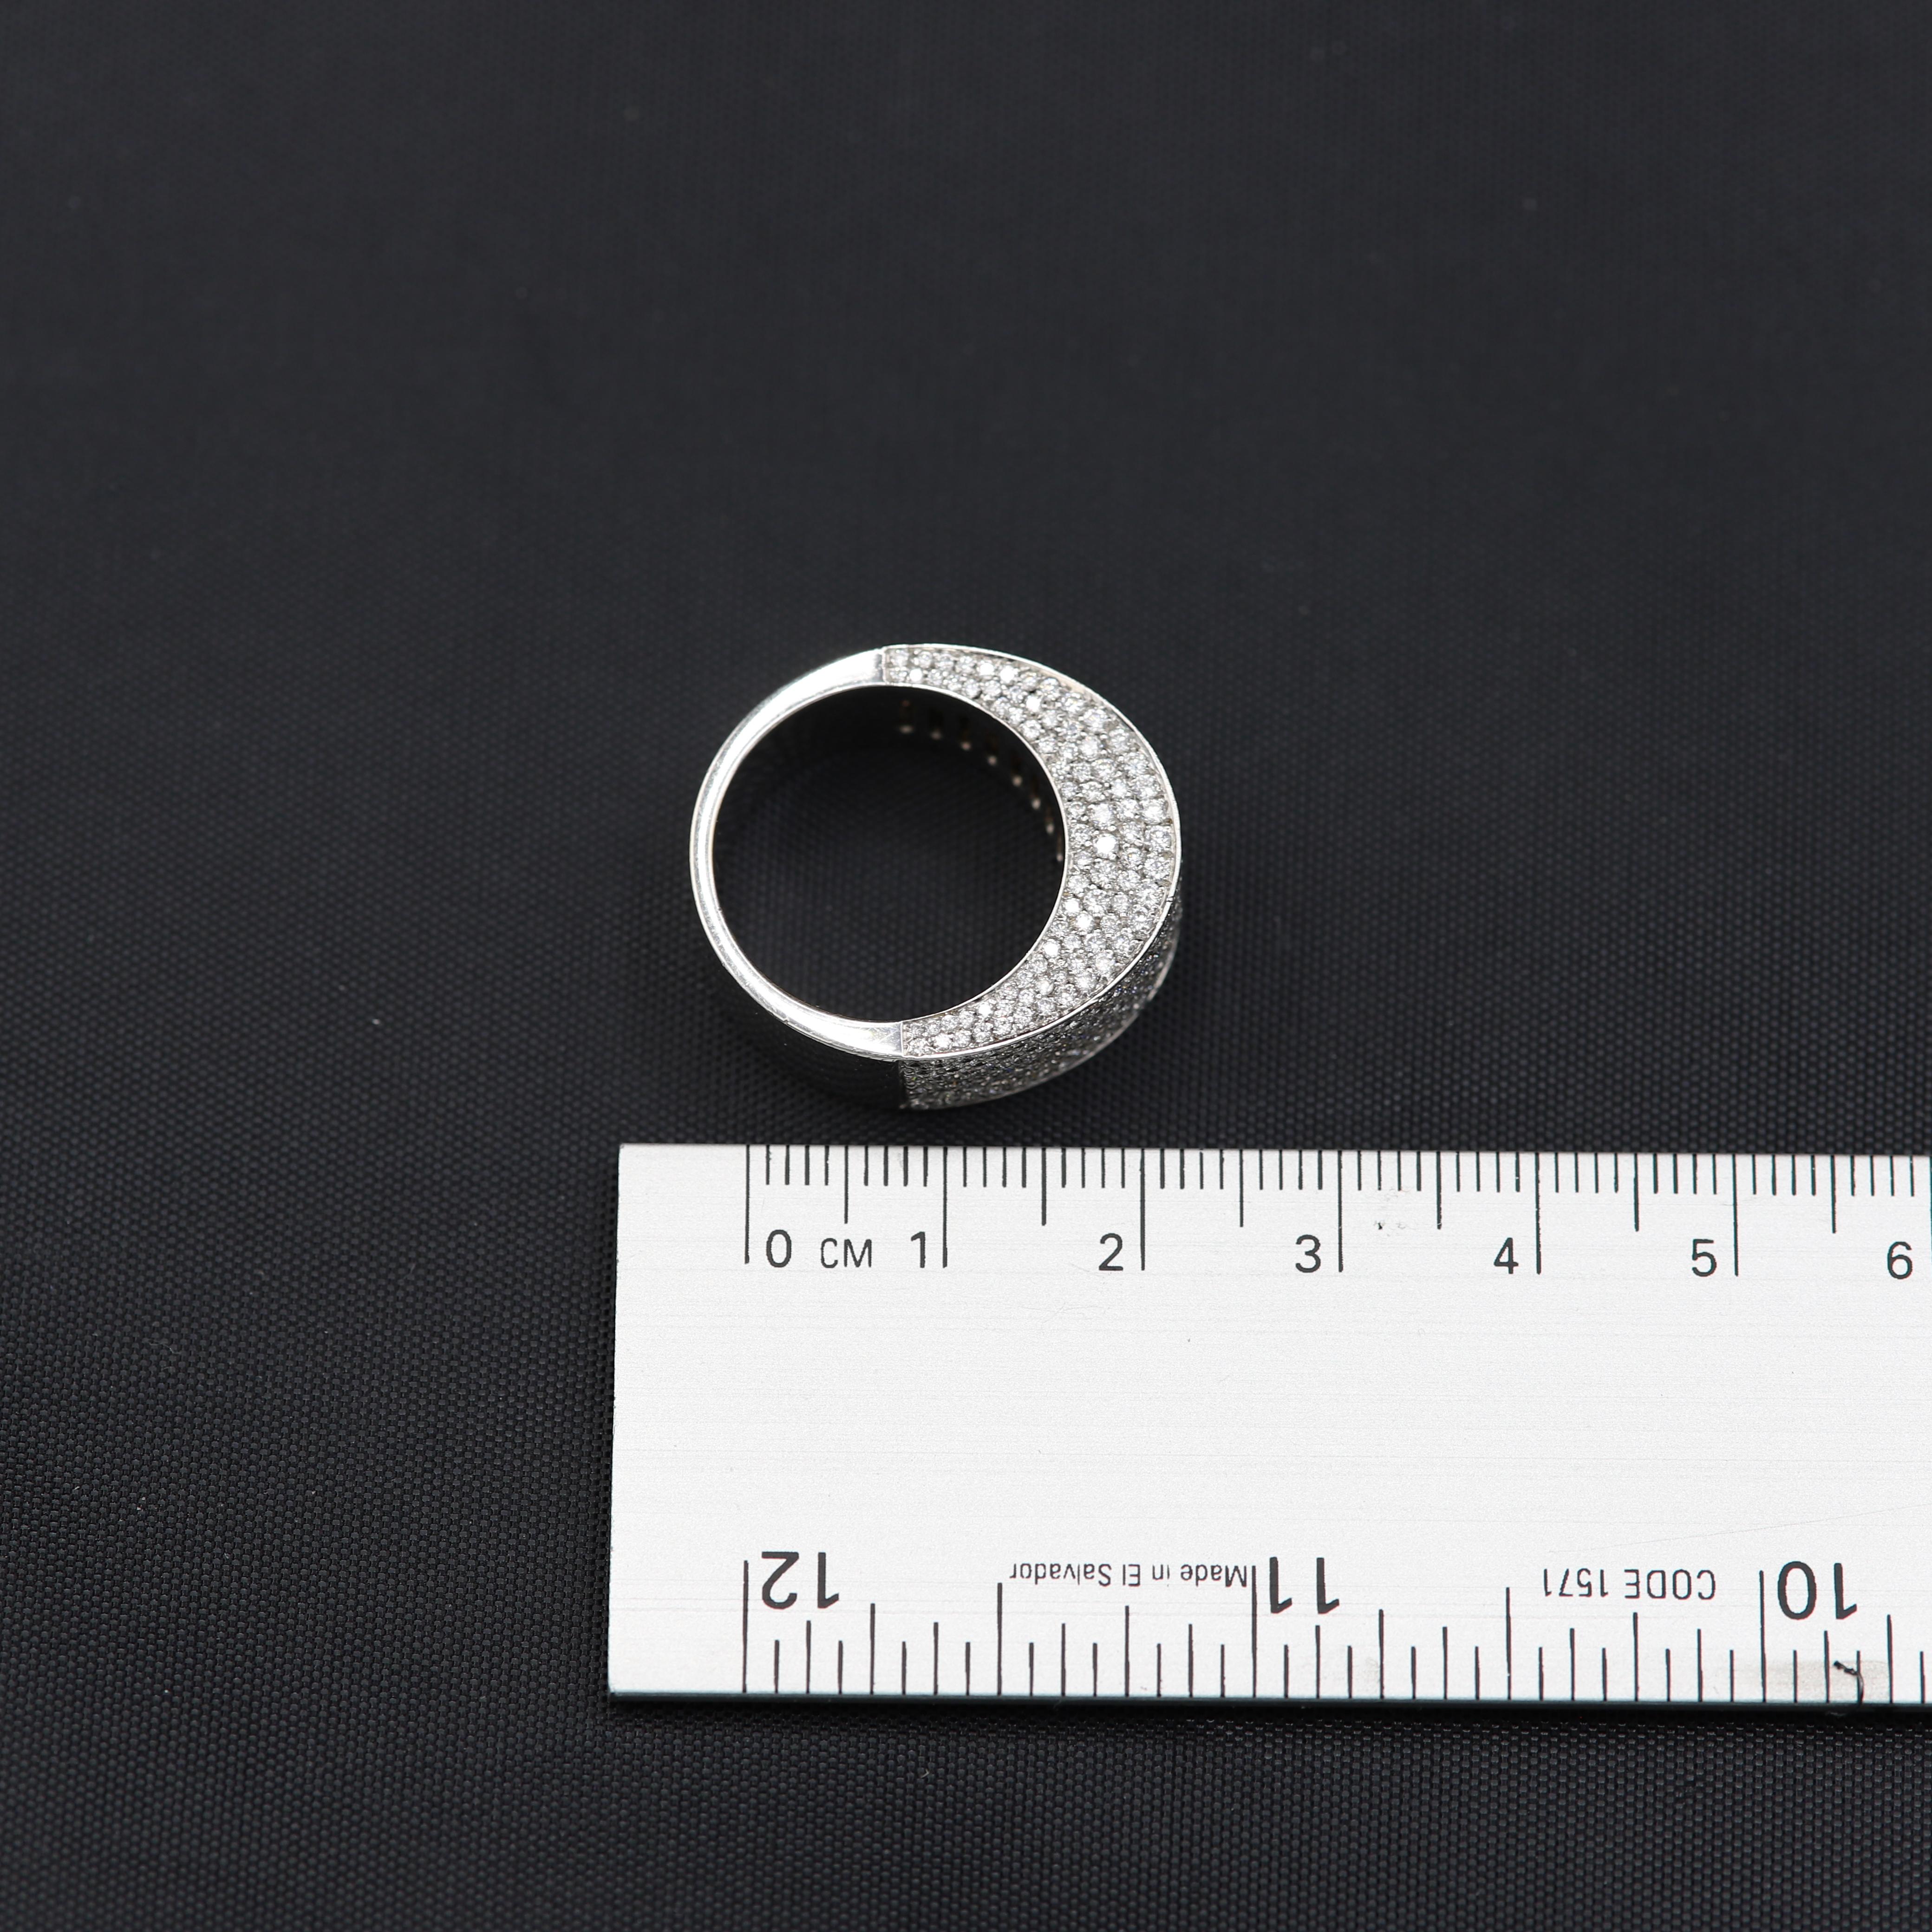 Cluster Dome Diamond ring
18k white gold 12.8 grams
Diamonds 2.49 carat G-VS
10 mm wide
finger size 7